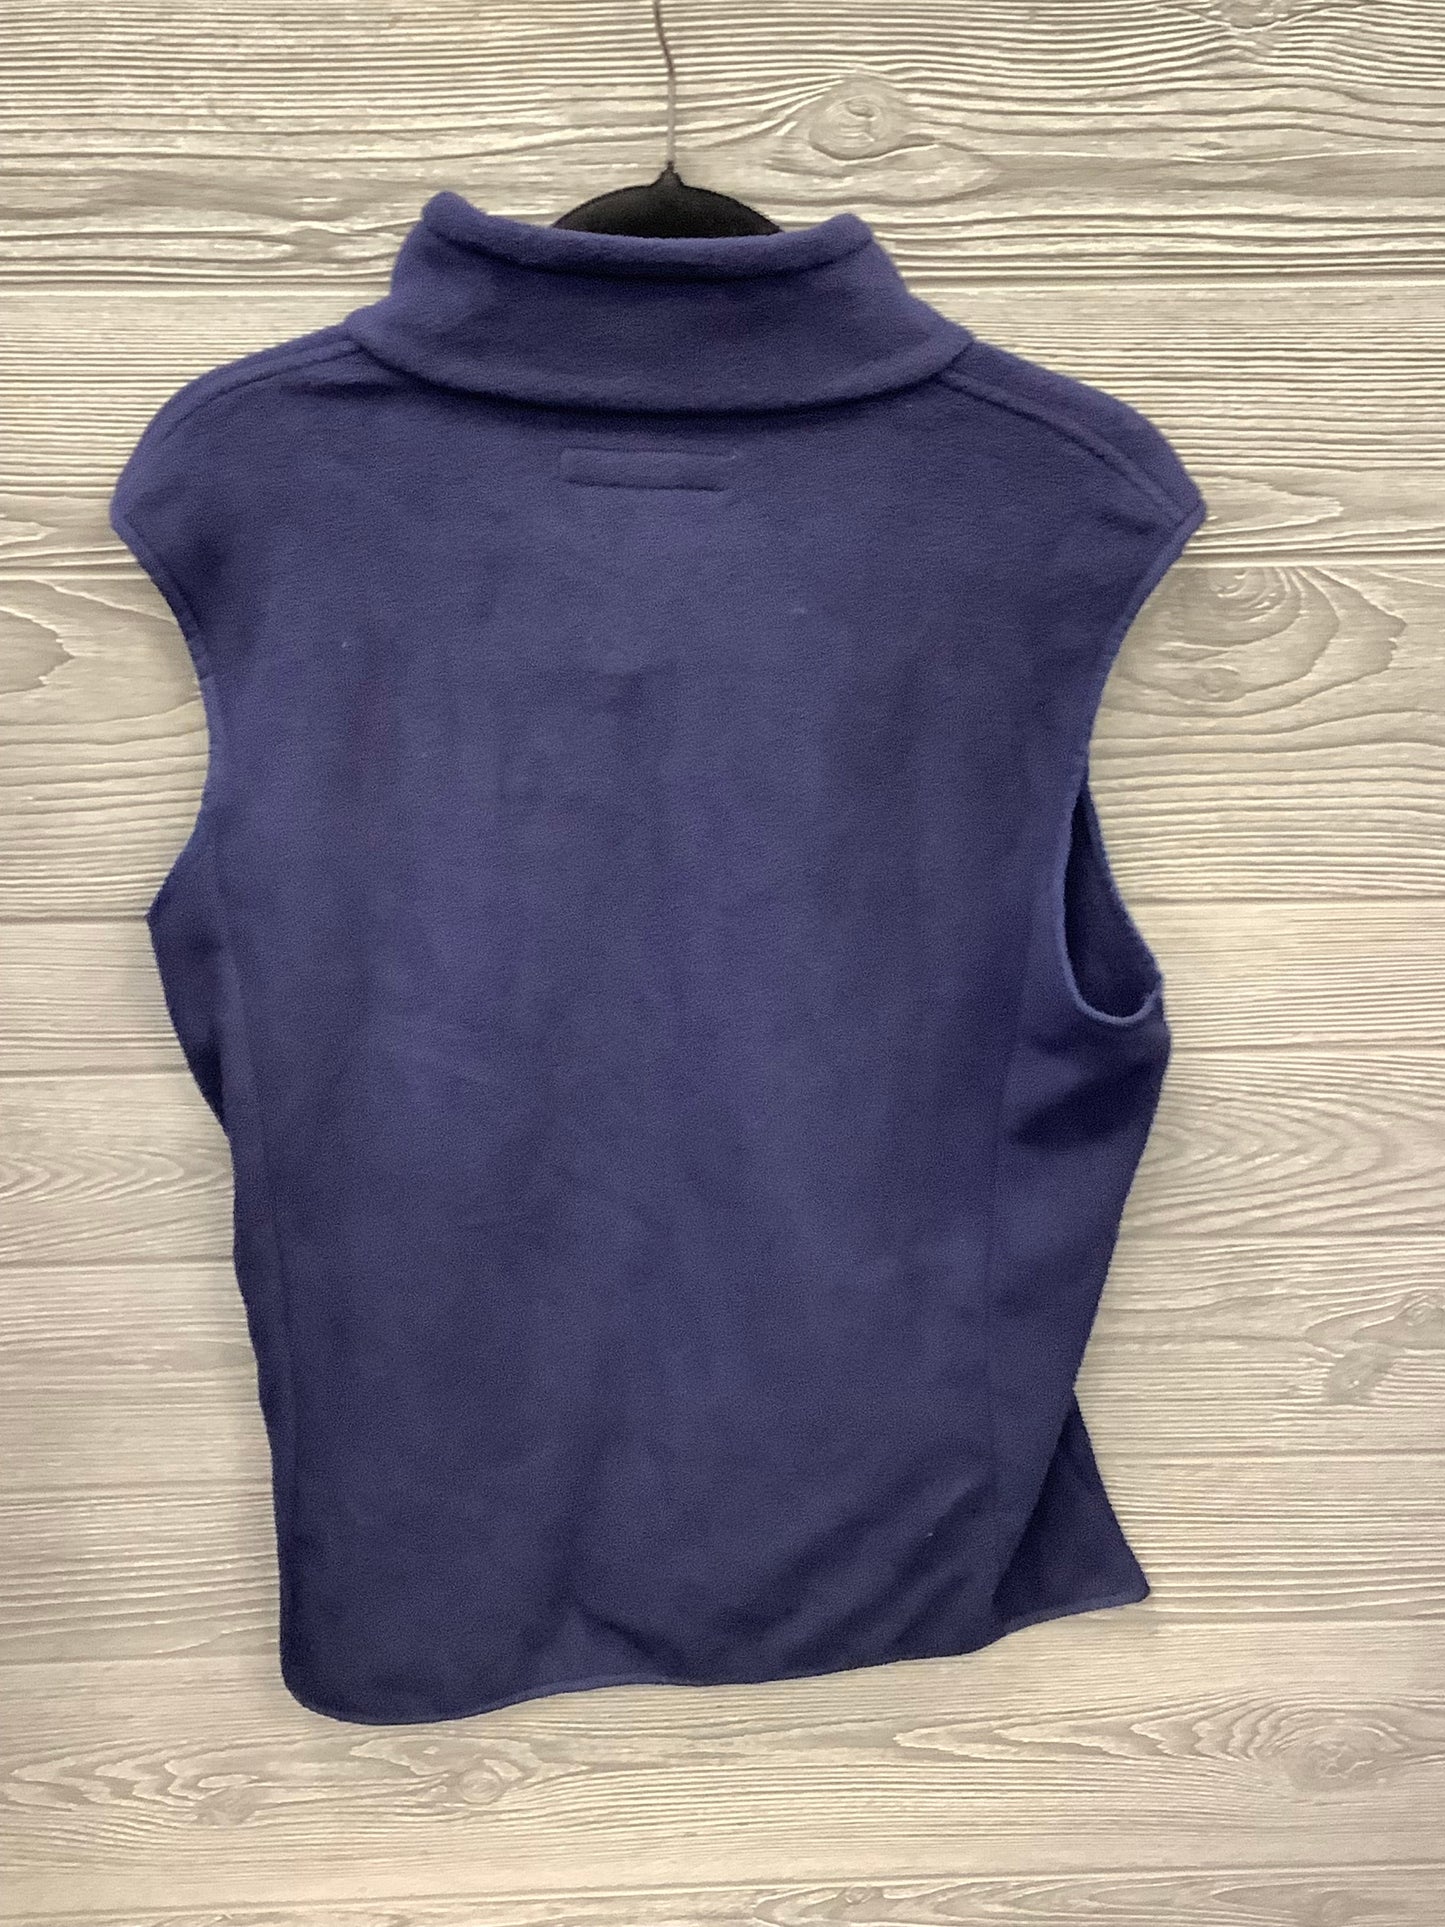 Vest Fleece By Amazon Essentials  Size: Xl